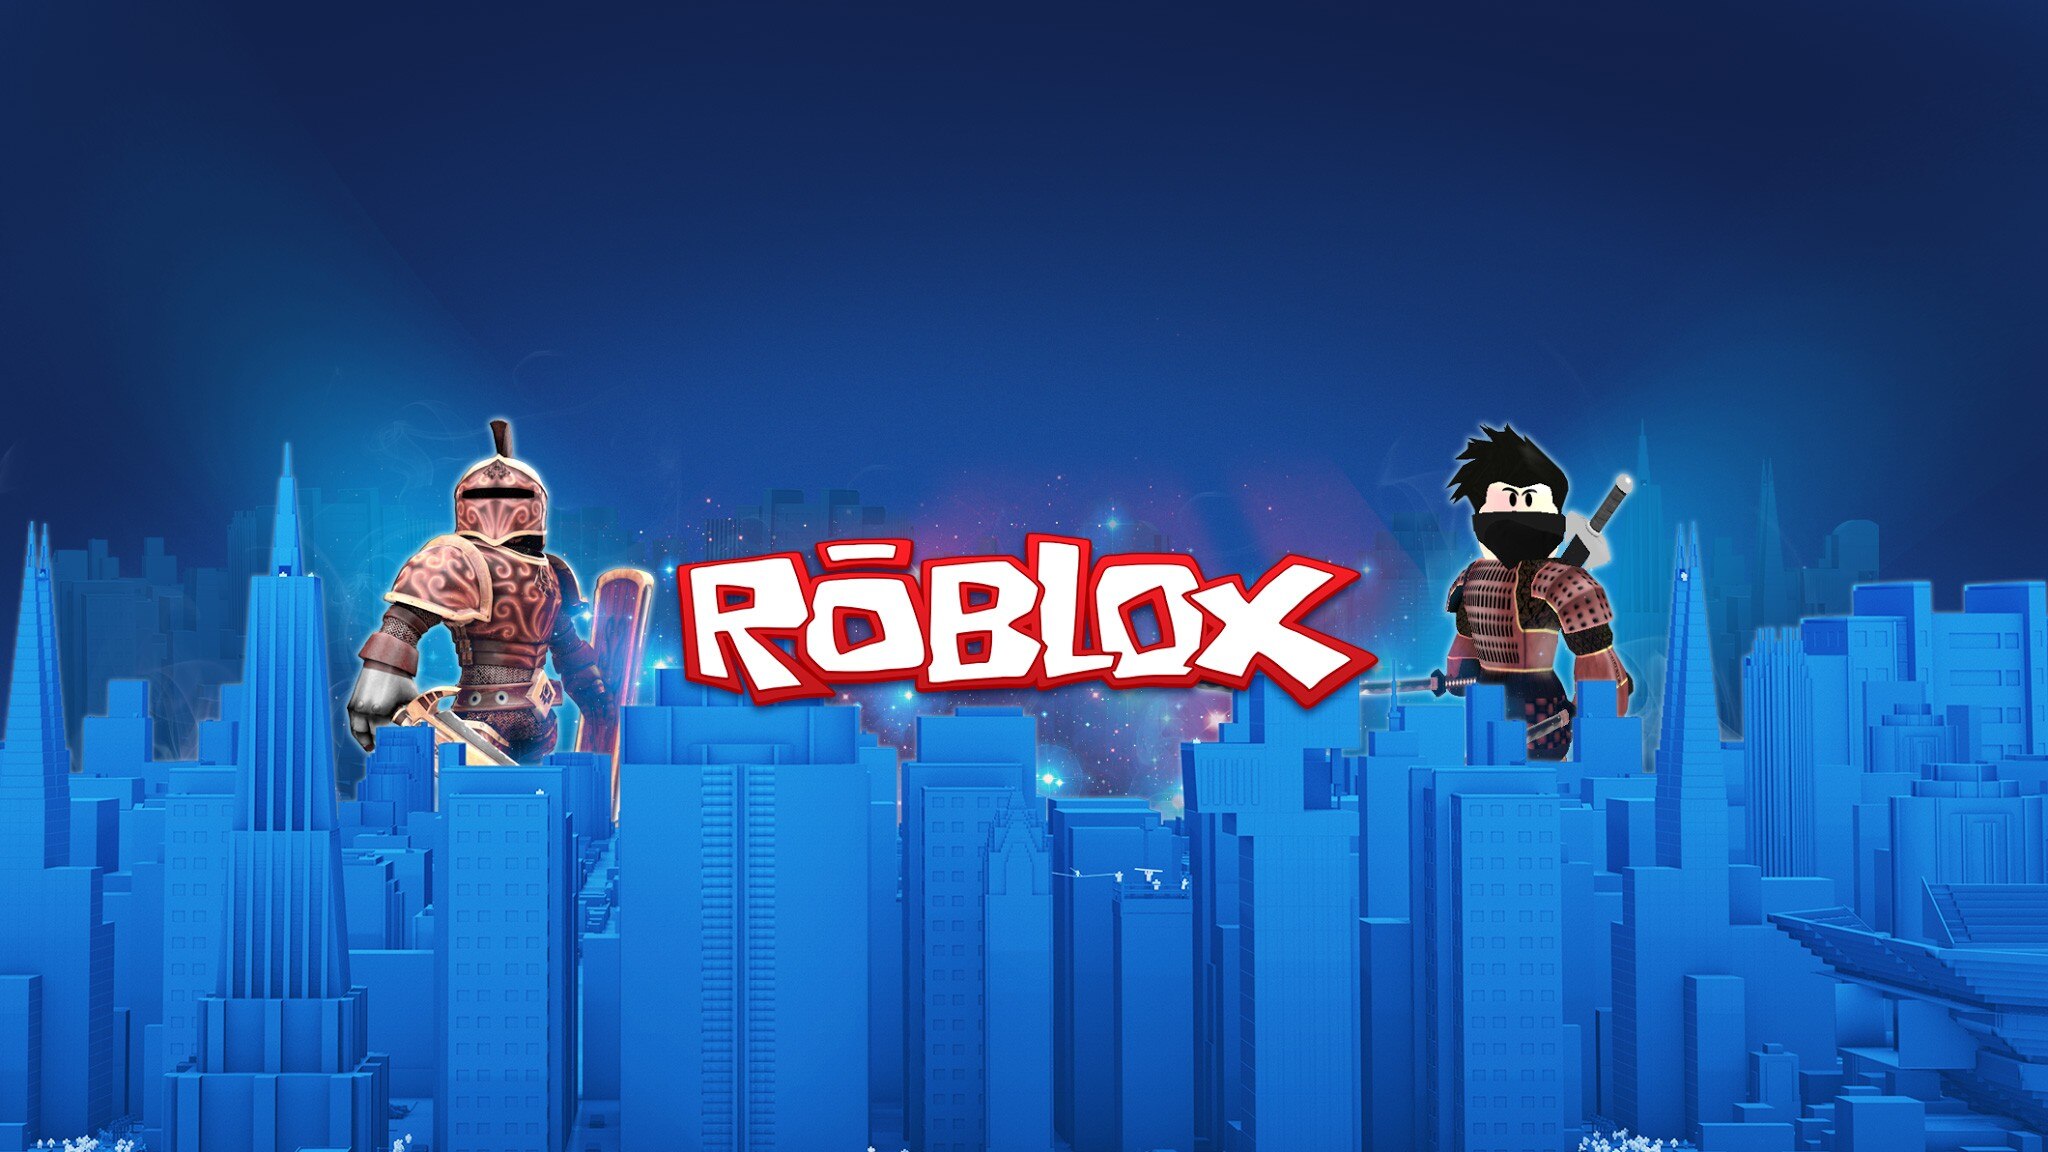 Roblox JoJo bizarre adventure id music part 2 